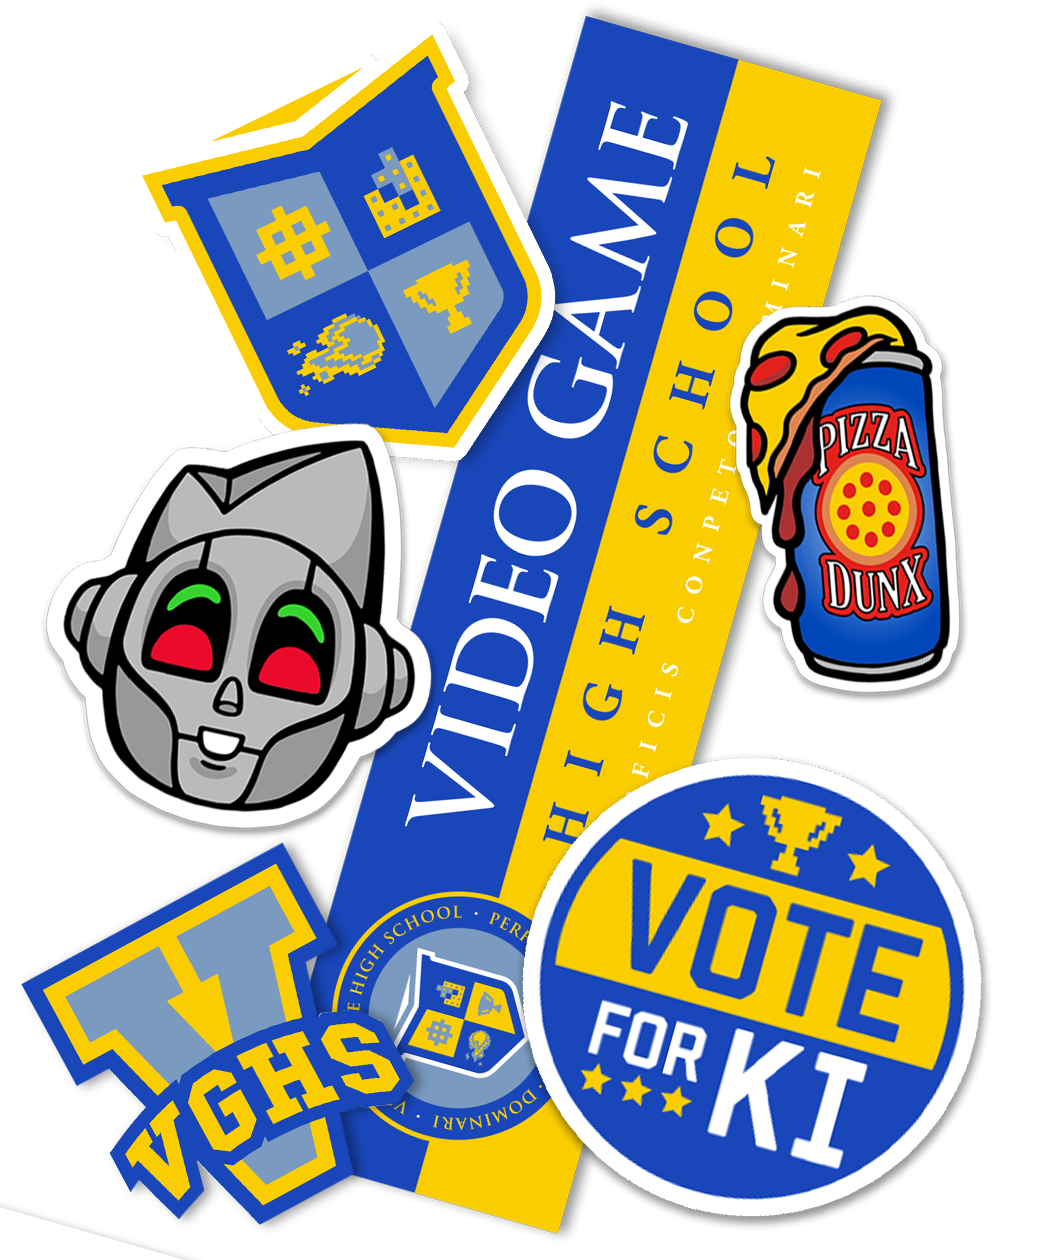 VGHS Logo crest sticker, Shotbot head sticker, V logo sticker, Vote for Ki sticker, and Pizza Dunx sticker. Also includes a Video Game High School bumper sticker.